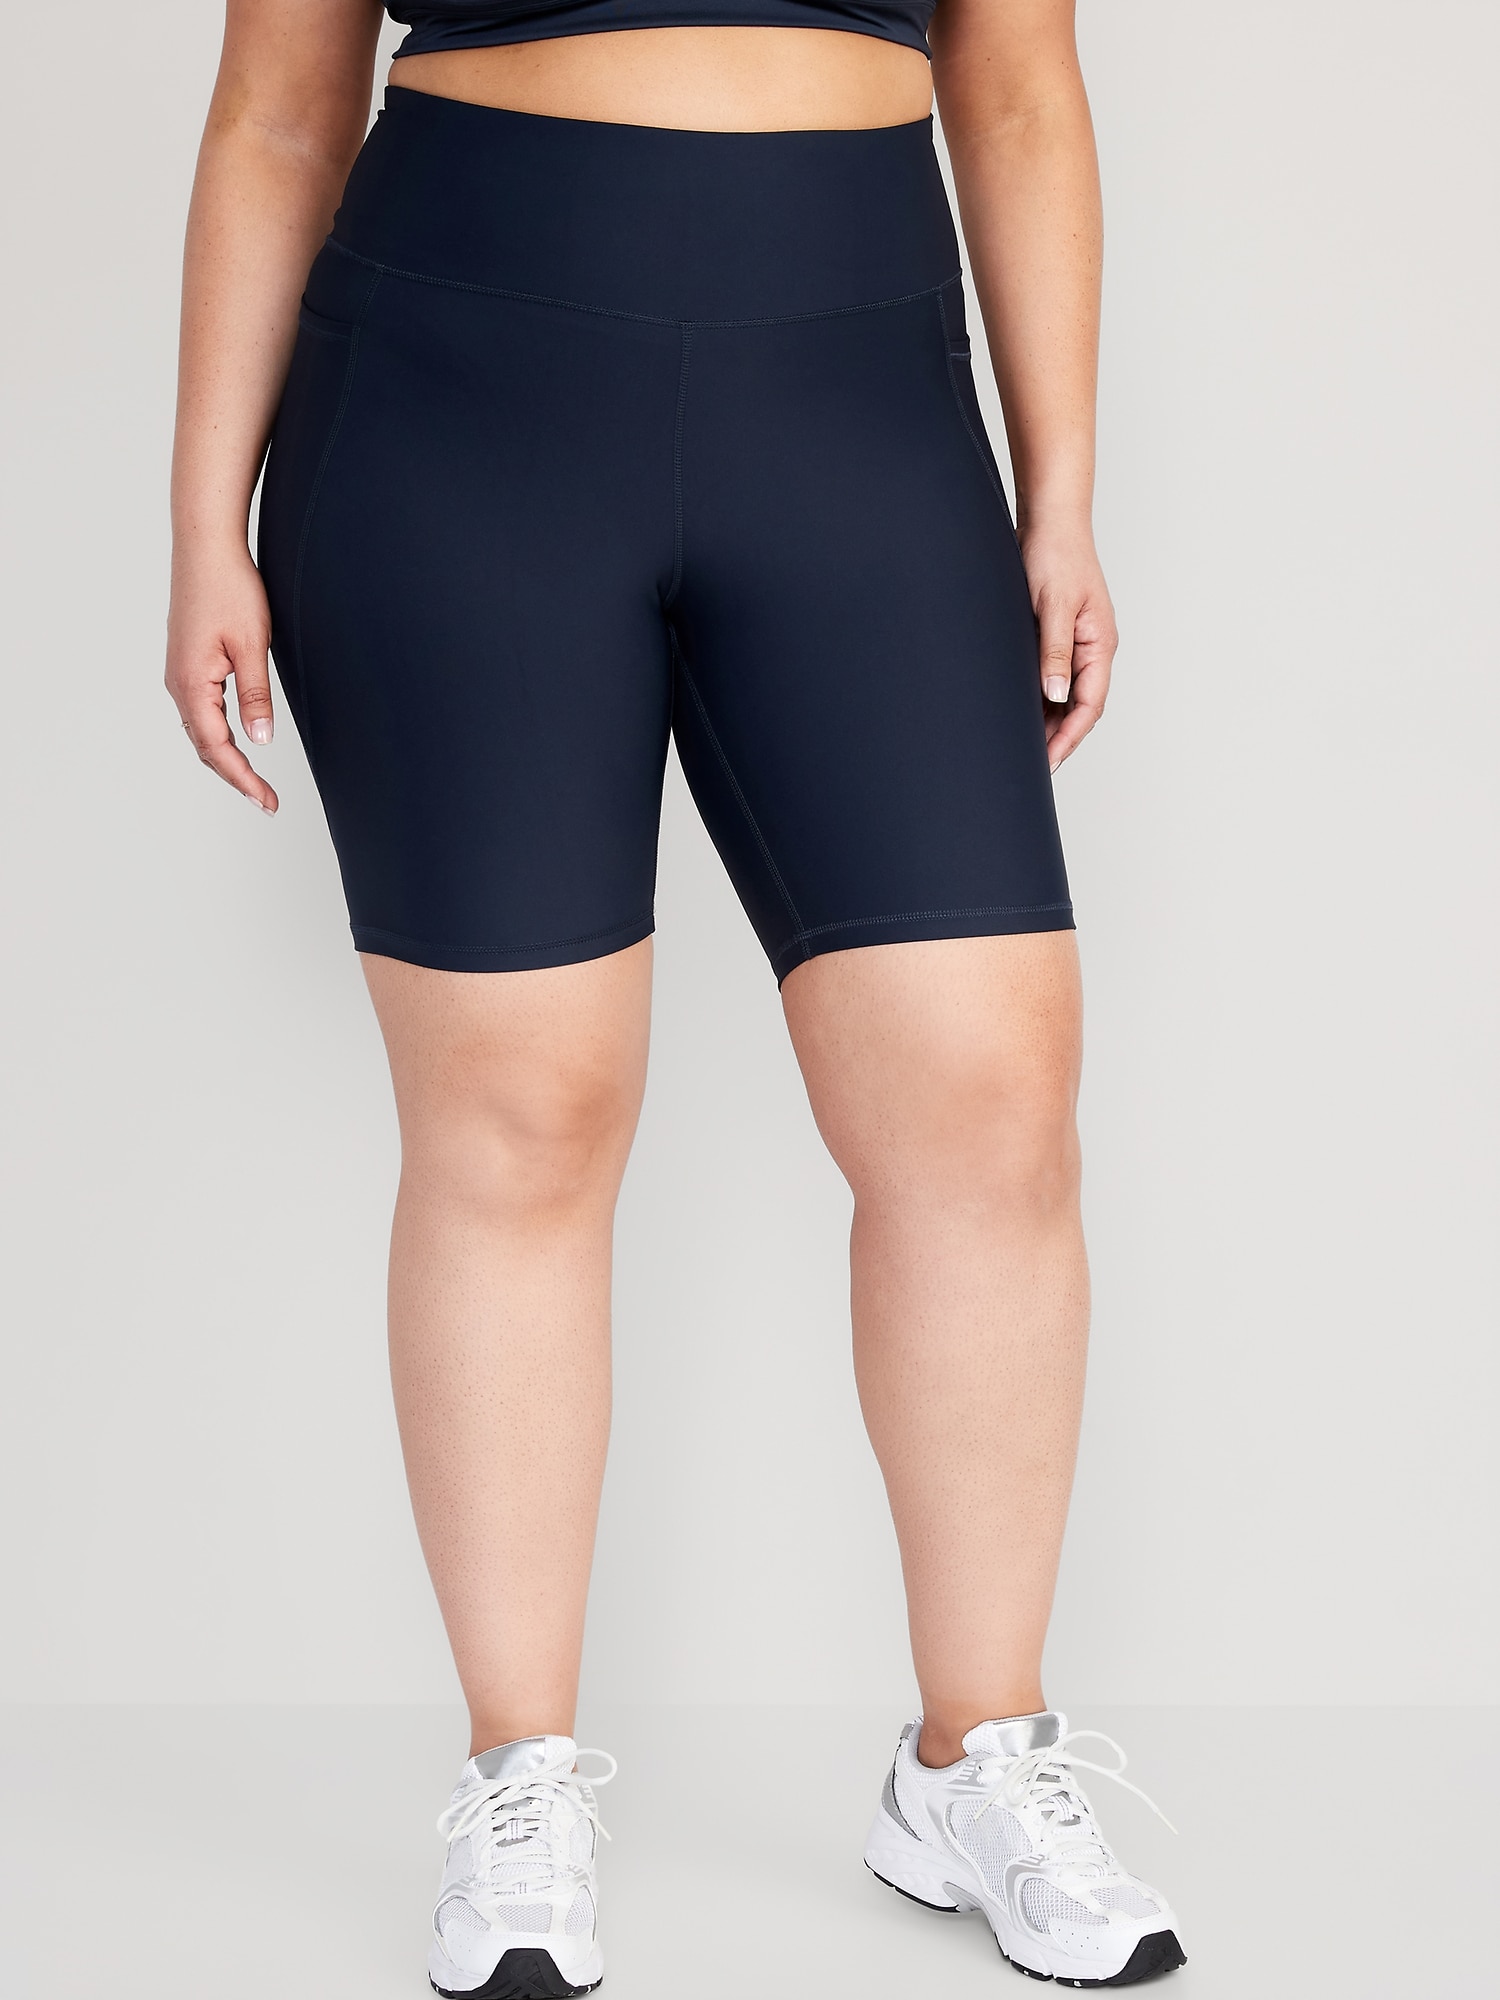 Old Navy Maternity Full Panel PowerSoft Biker Shorts - 8-inch inseam